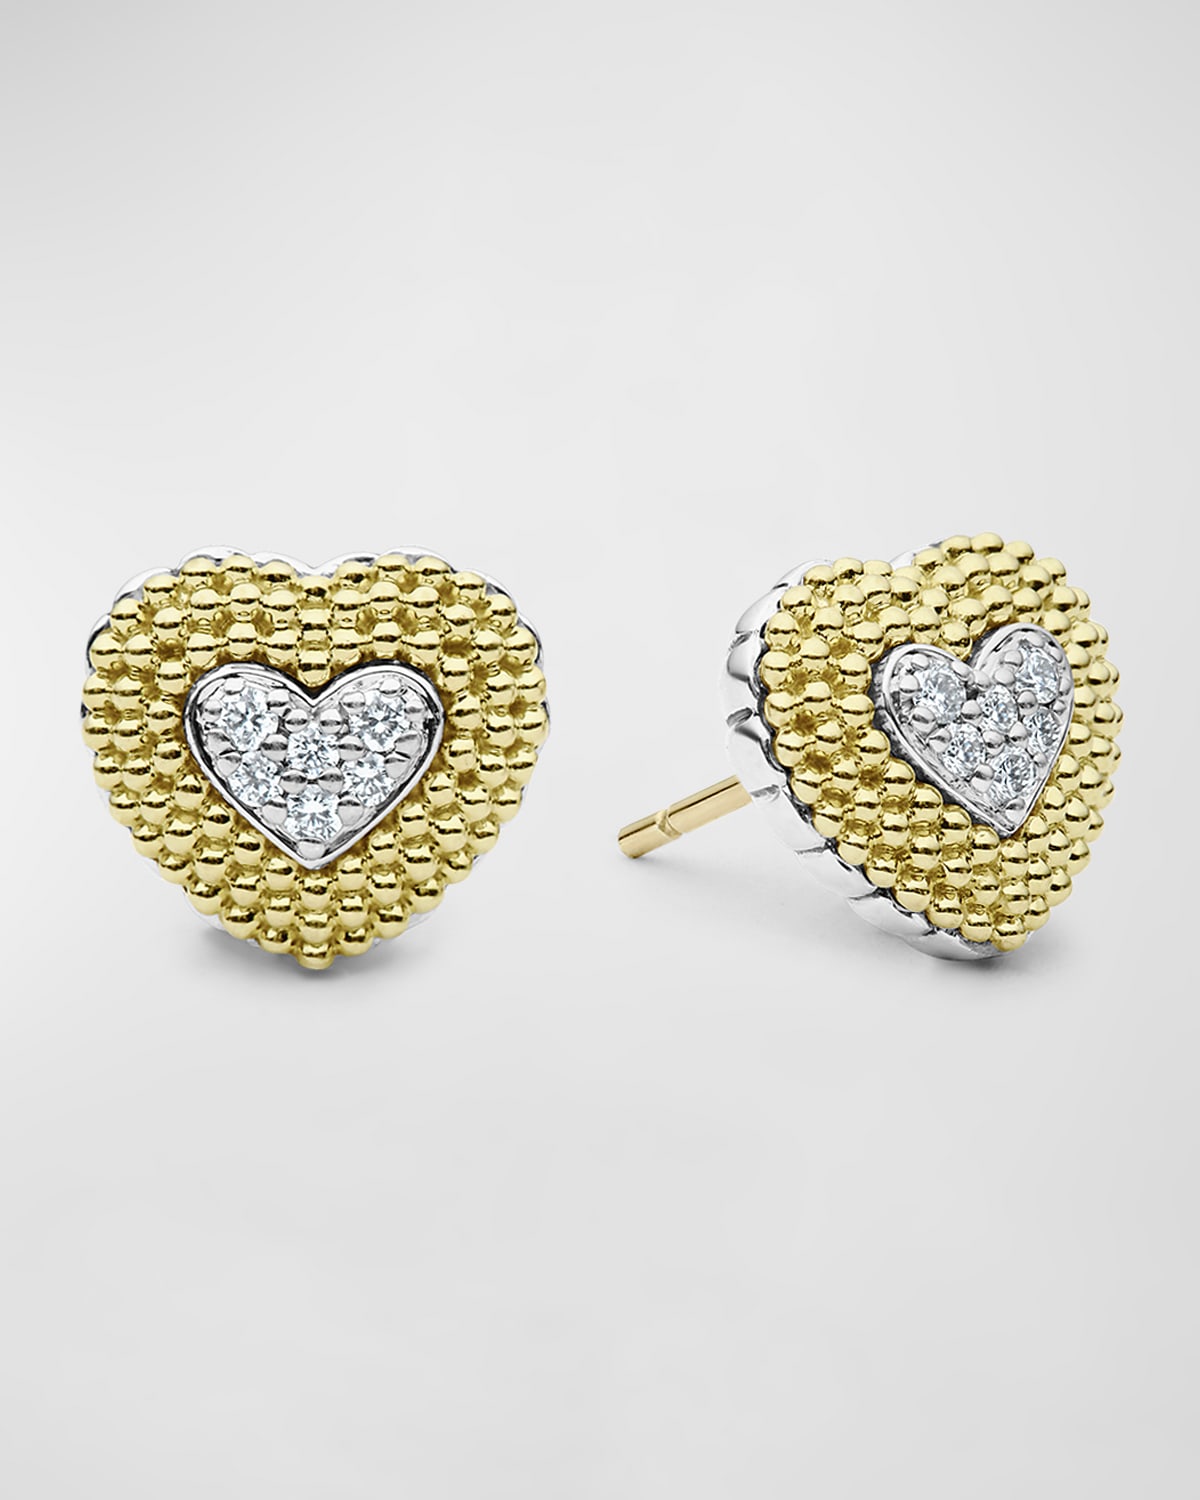 Diamond Heart Stud Earrings in 18K Gold and Sterling Silver